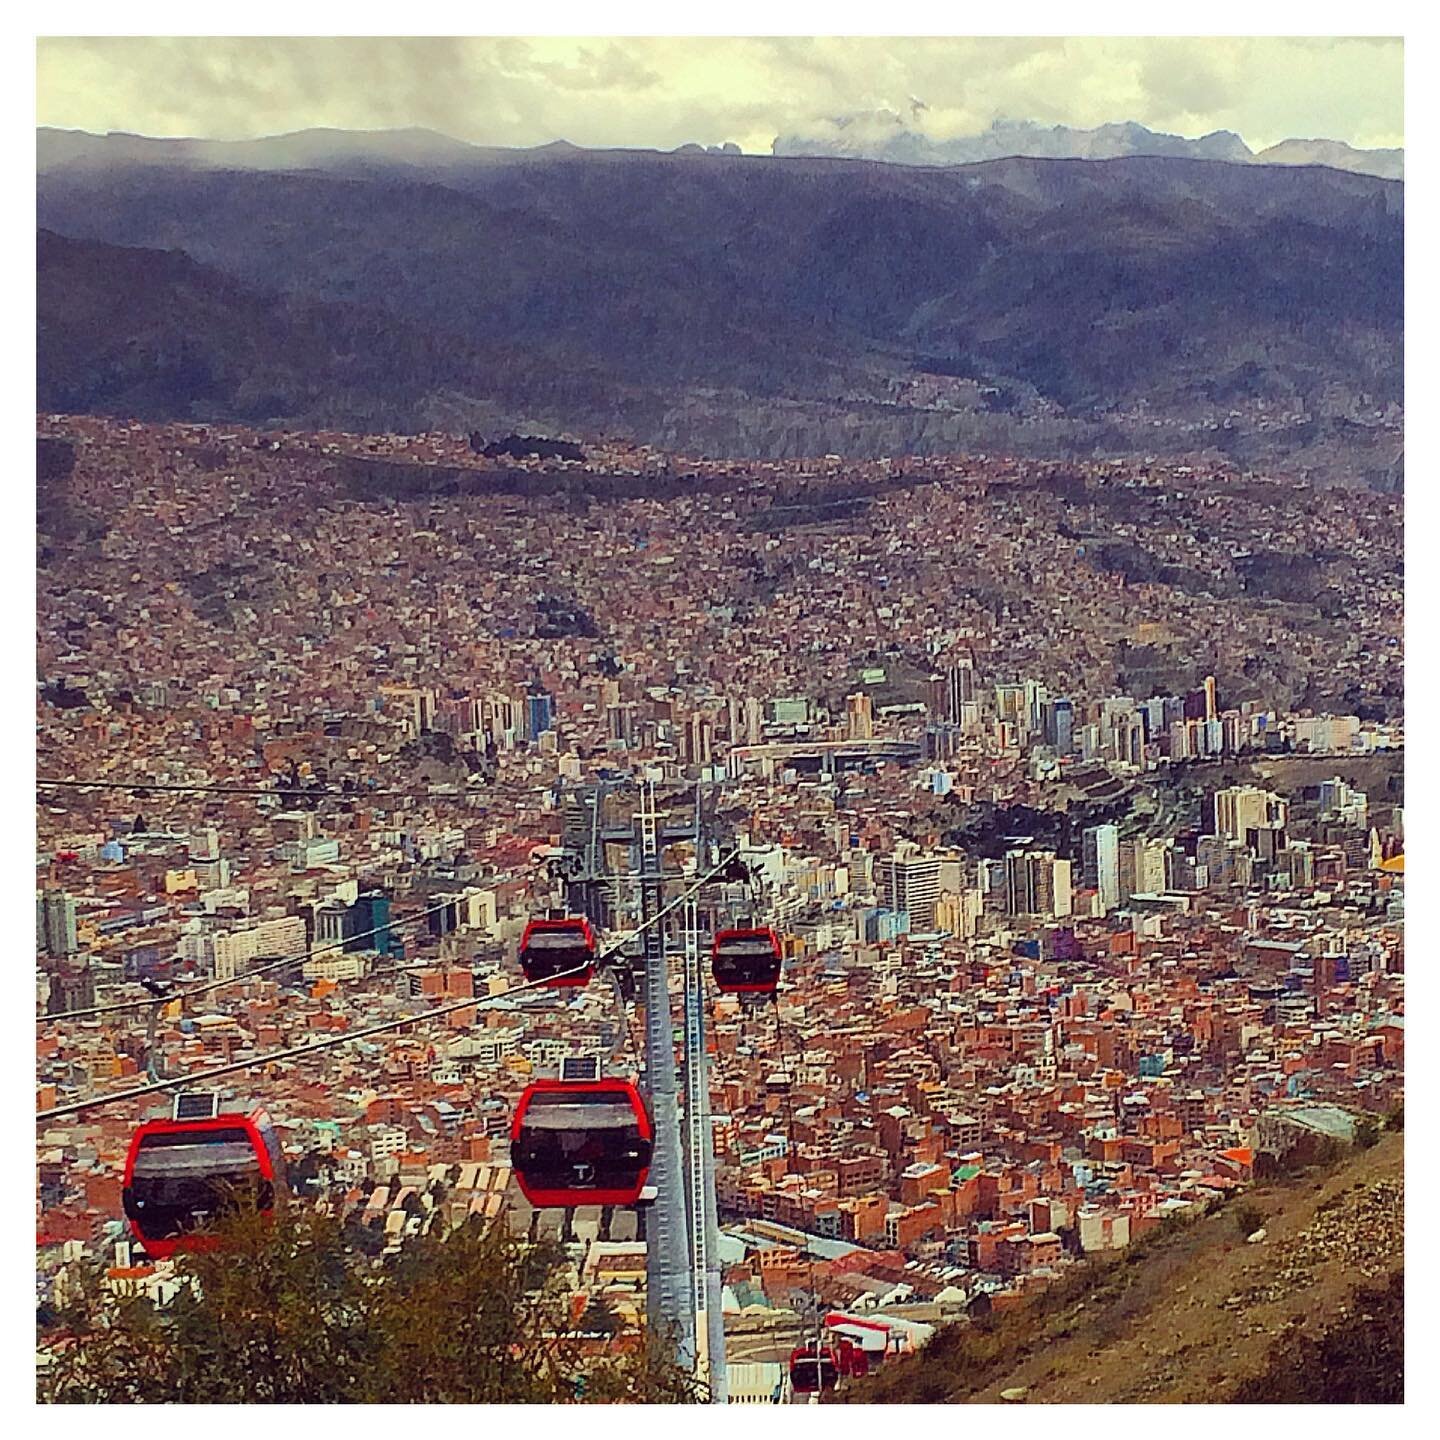 Love me a city where public transport includes cable cars 🚡 
*
📍La Paz, Bolivia 🇧🇴
*
*
*
#lapaz #bolivia #southamerica #cablecars #publictransport #wanderfuljourneys